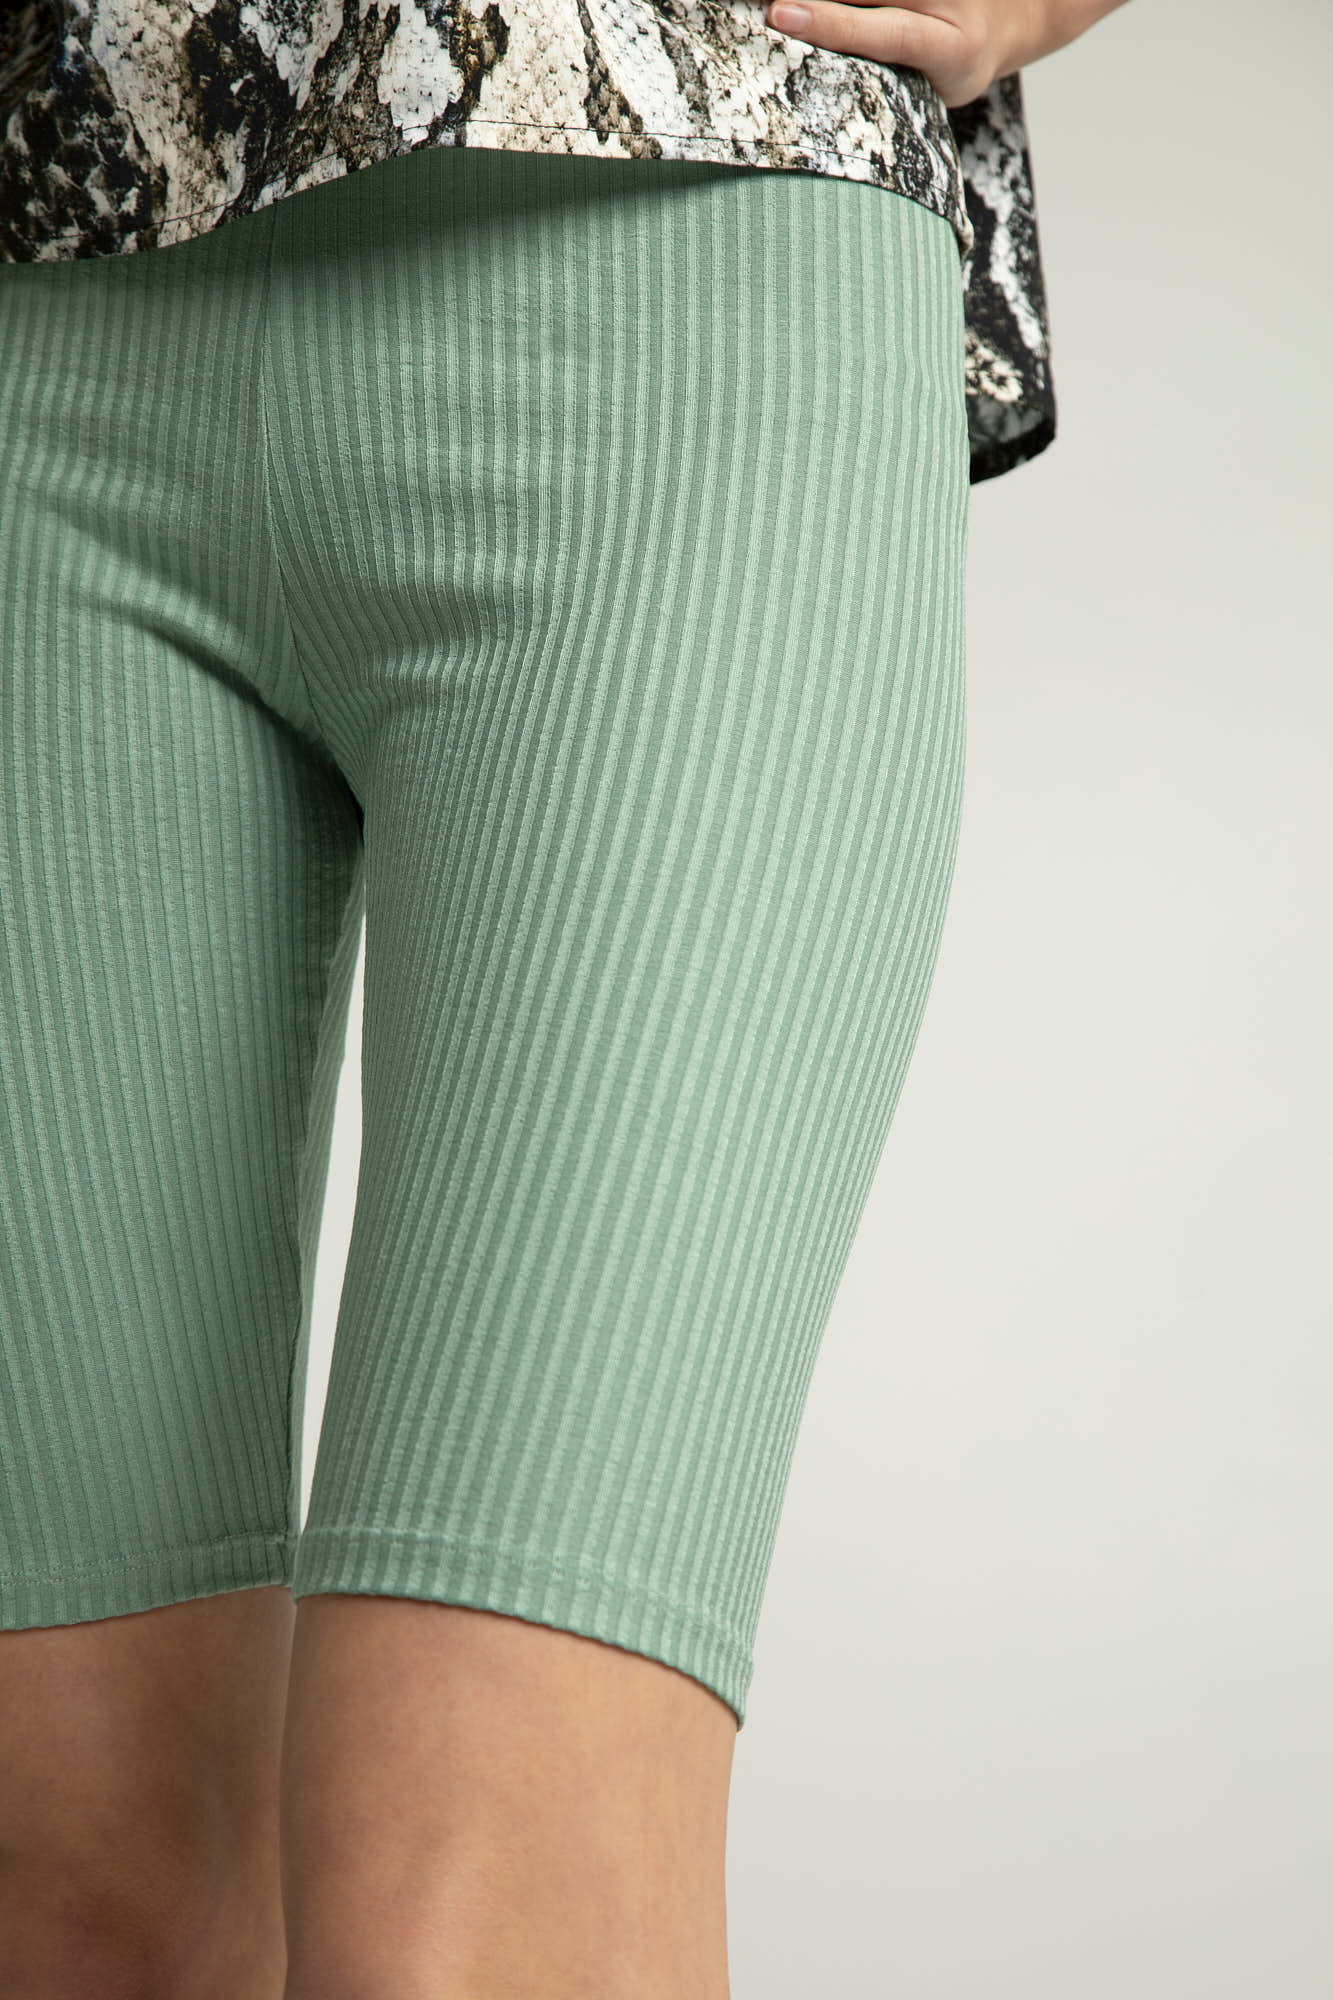 Cycling-Shorts AENIS in mint von LOVJOI aus TENCEL™